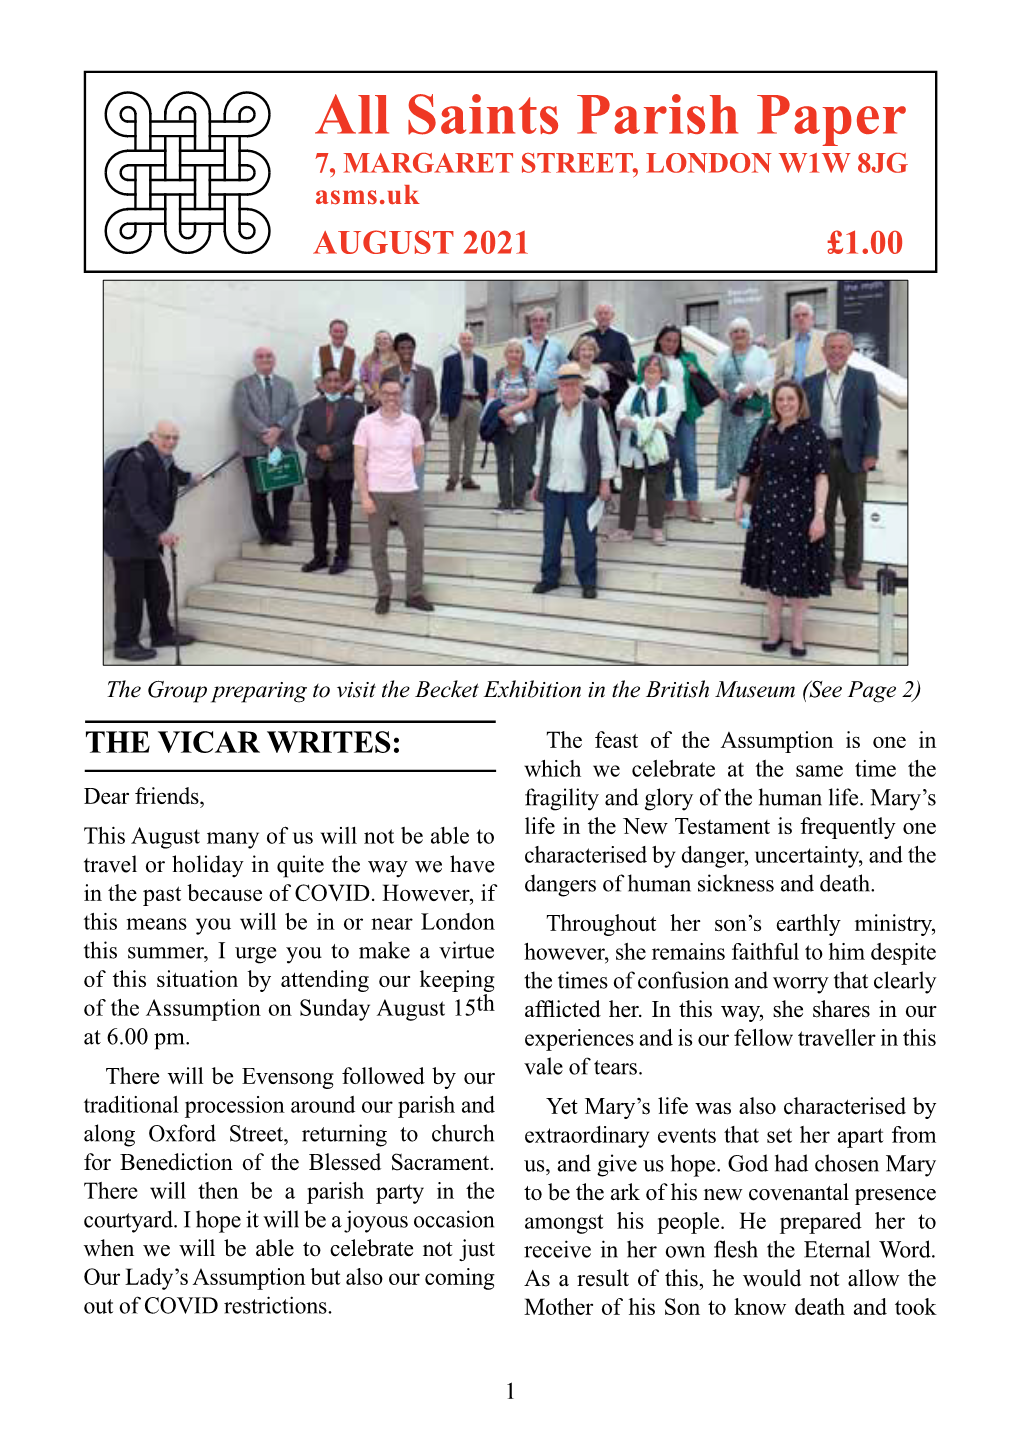 Read the Parish Paper August 2021 Published